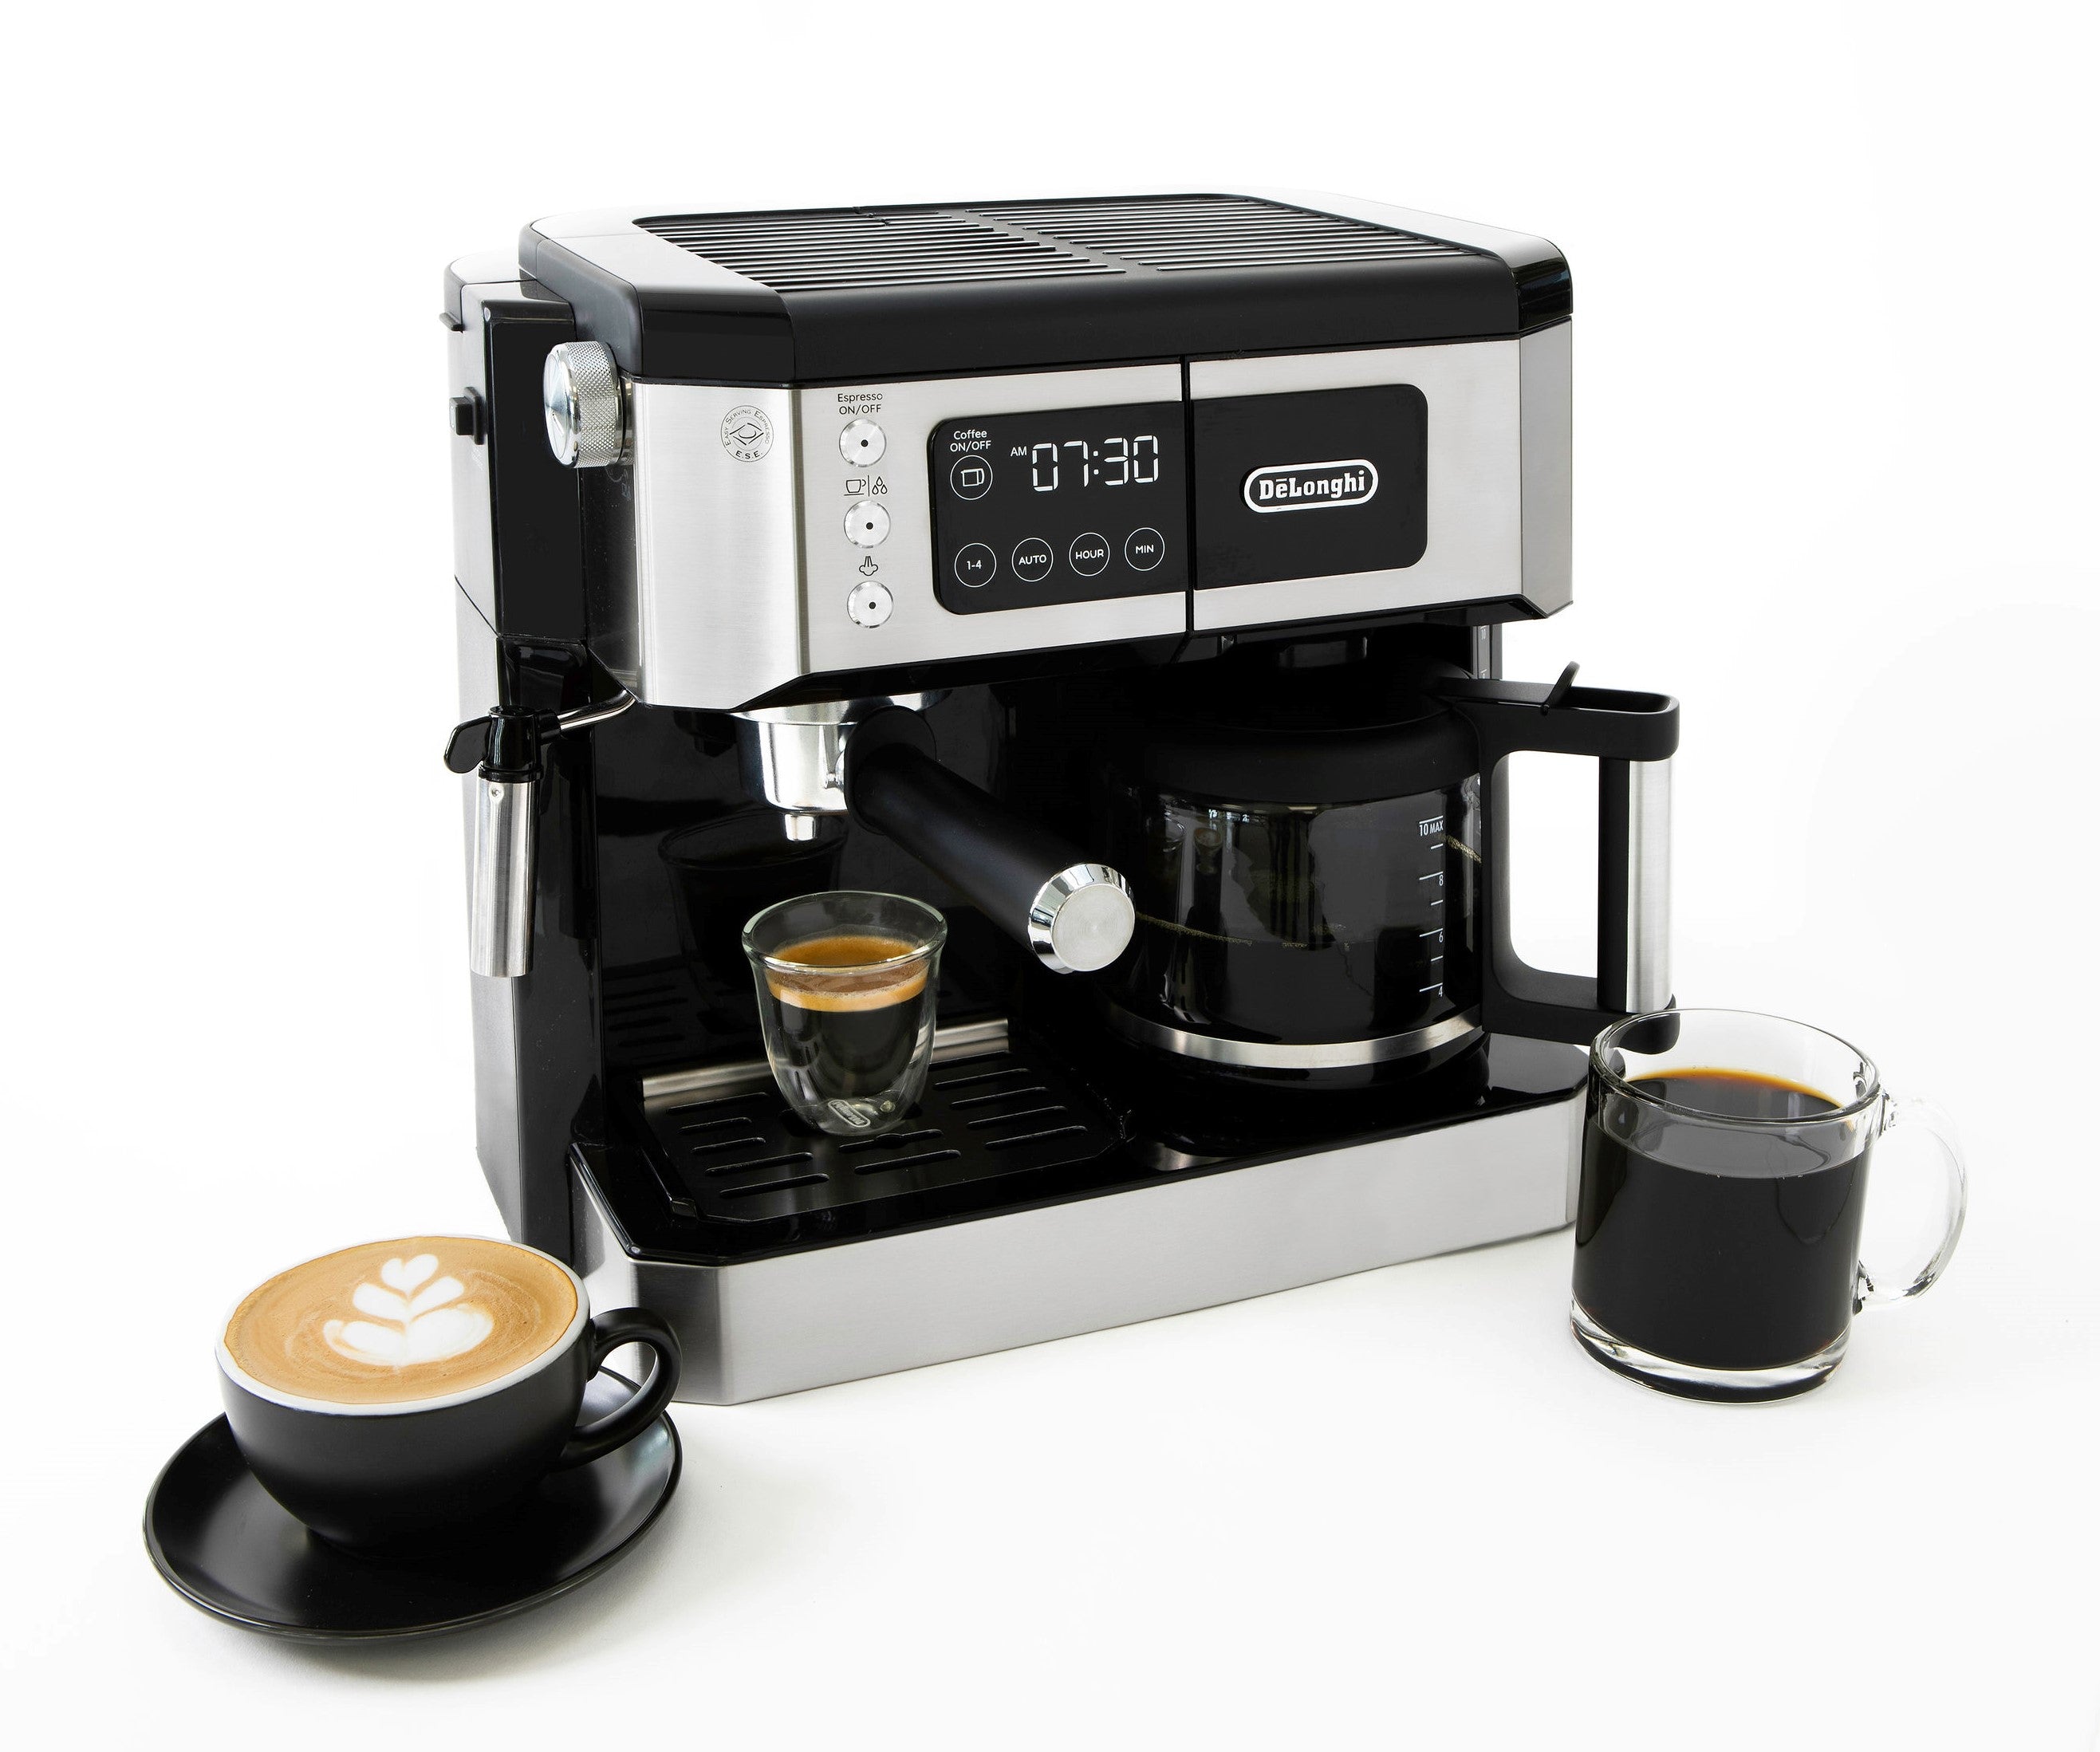 DeLonghi All In One Coffee And Espresso Machine for Sale in Yakima